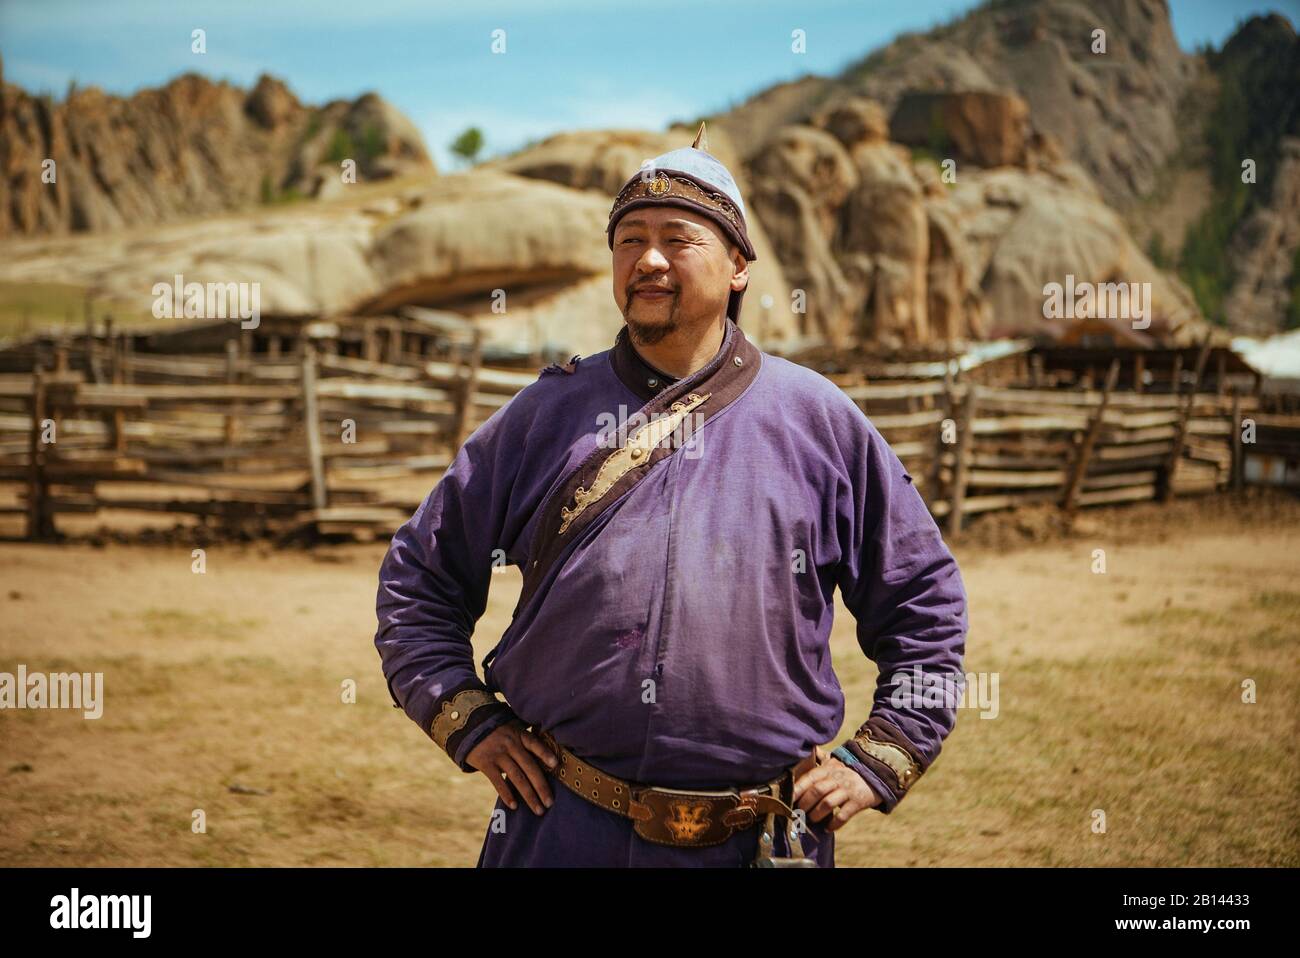 Nomad in traditional clothing, Mongolian Switzerland, Gobi Desert, Mongolia Stock Photo